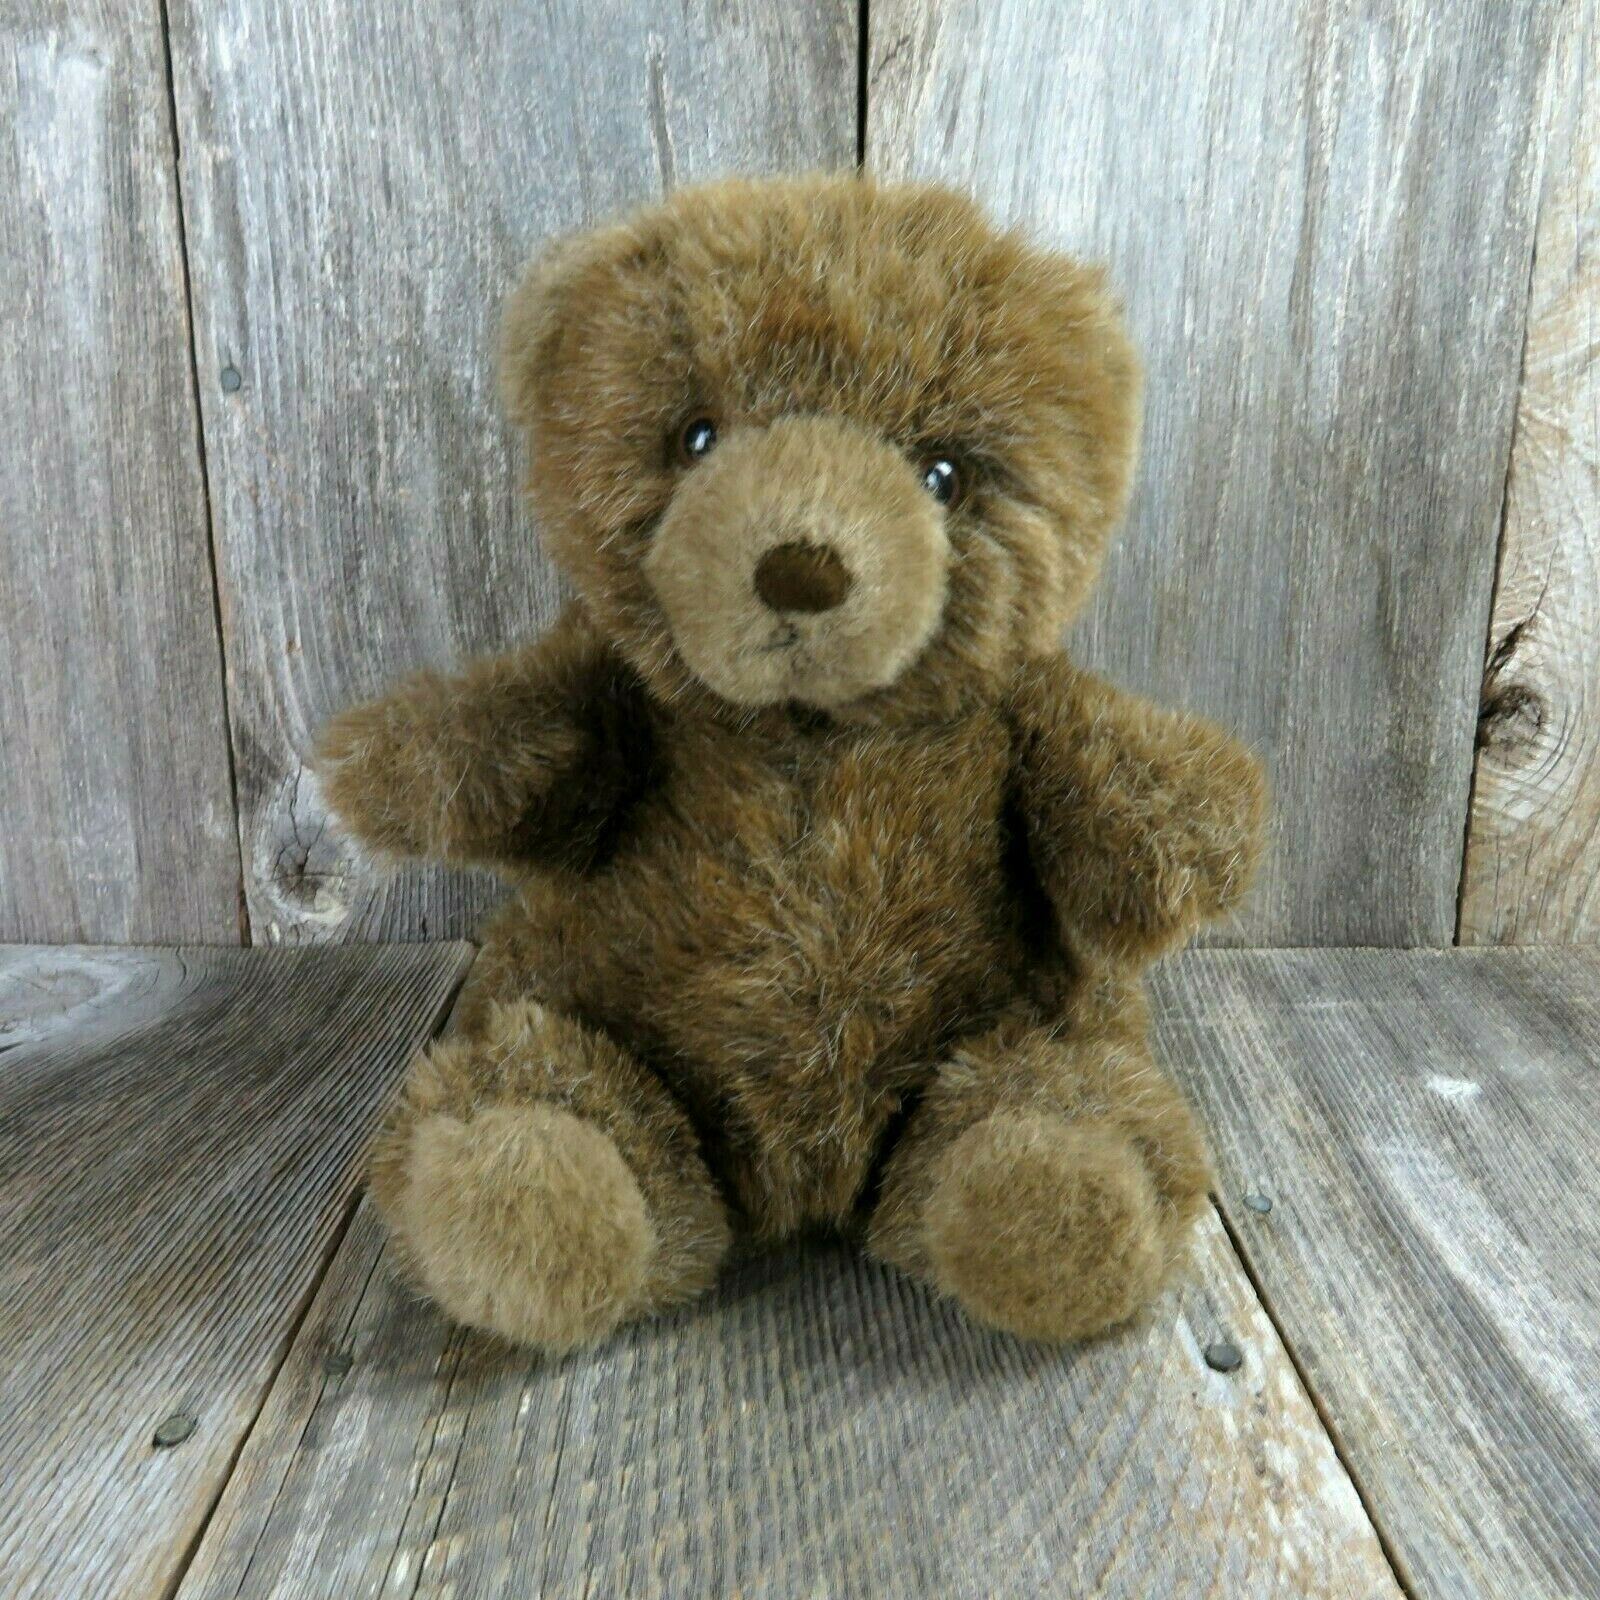 Vintage Teddy Bear Plush Pot Belly Potbelly Stuffed Animal Toy Doll Charm Co - At Grandma's Table